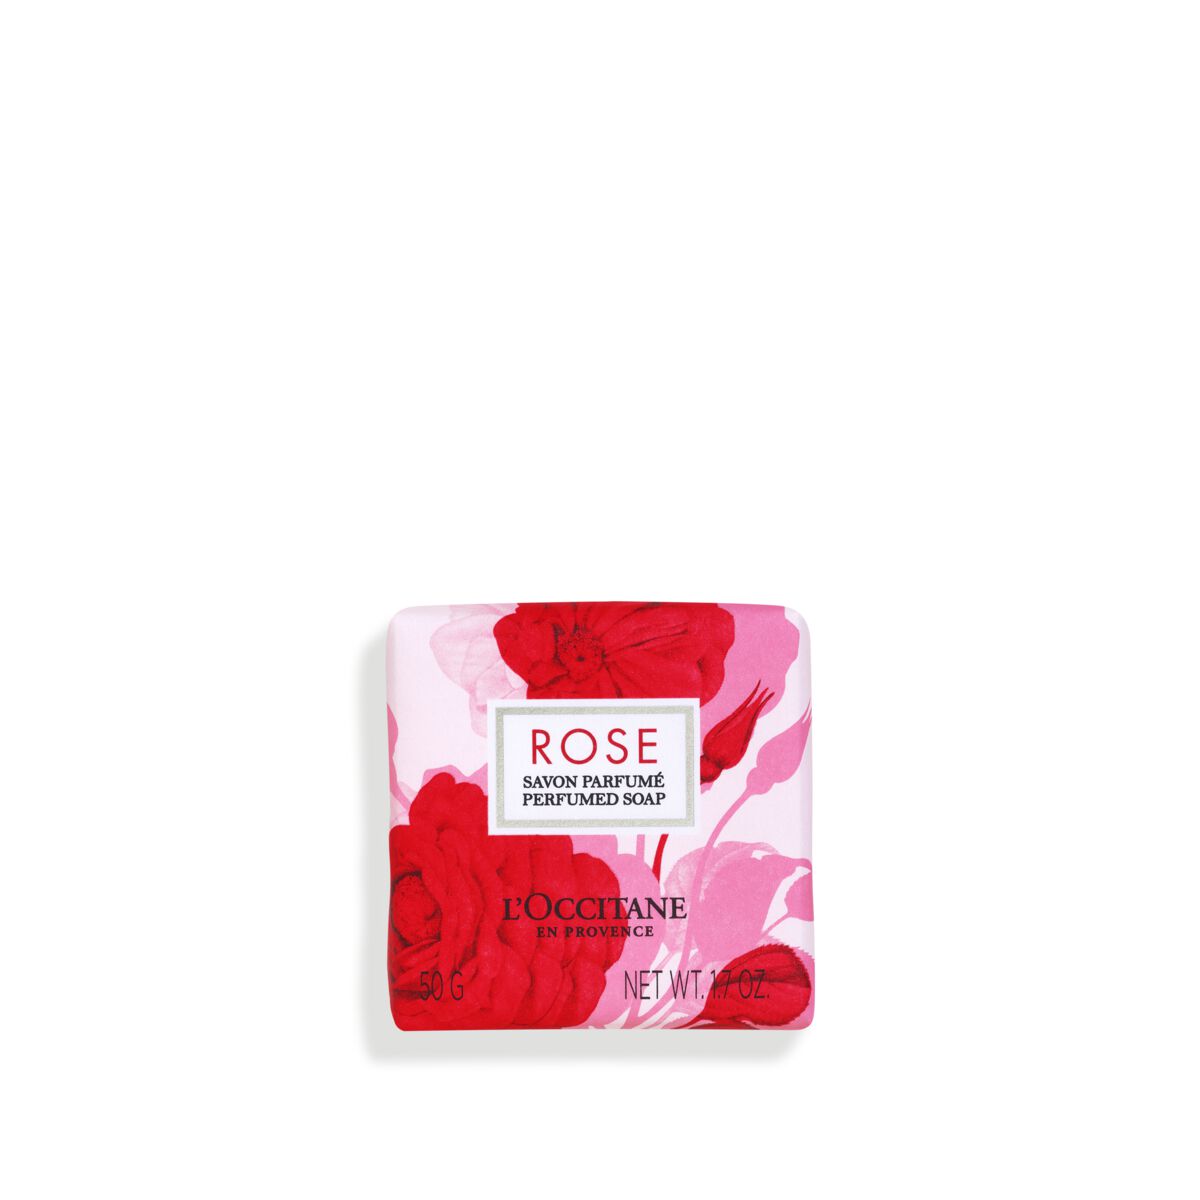 Rose Geparfumeerde Zeep 50g - L'Occitane en Provence